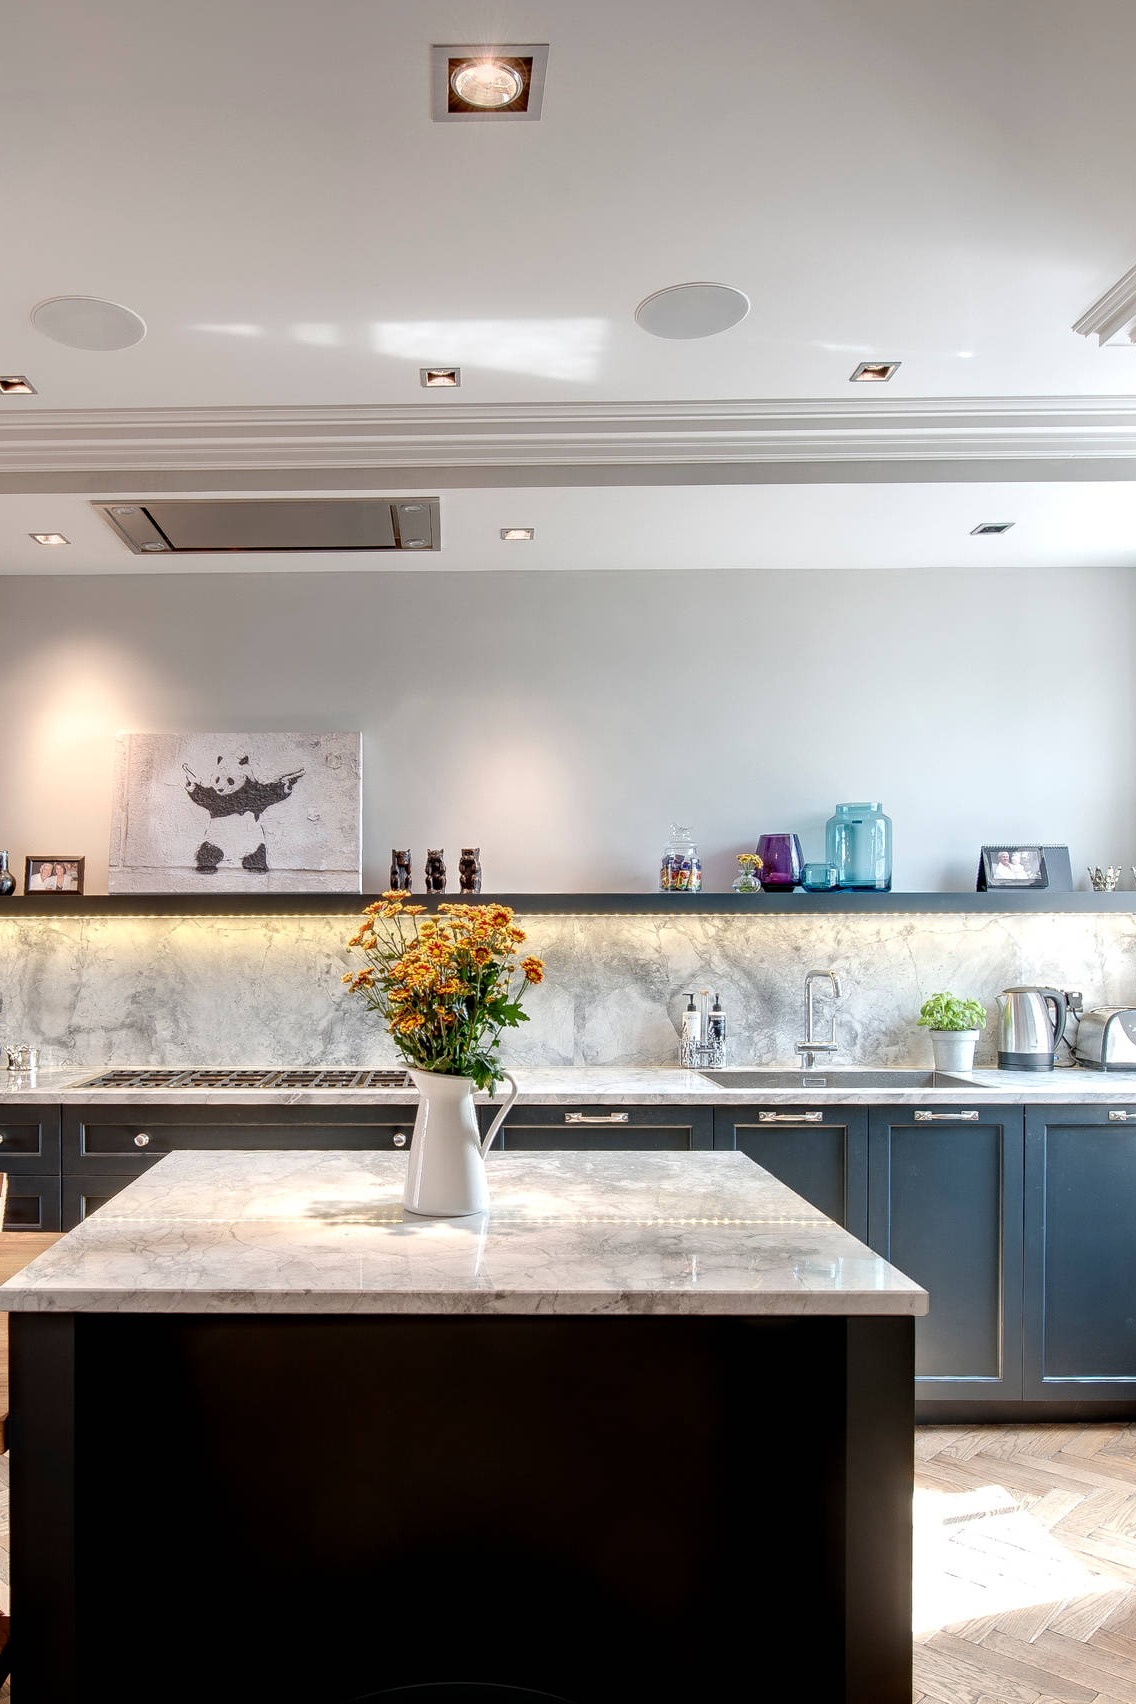 Viscount White Countertops Dark Gray Cabinets Full Height Granite Backsplash Hardwood Floors 1